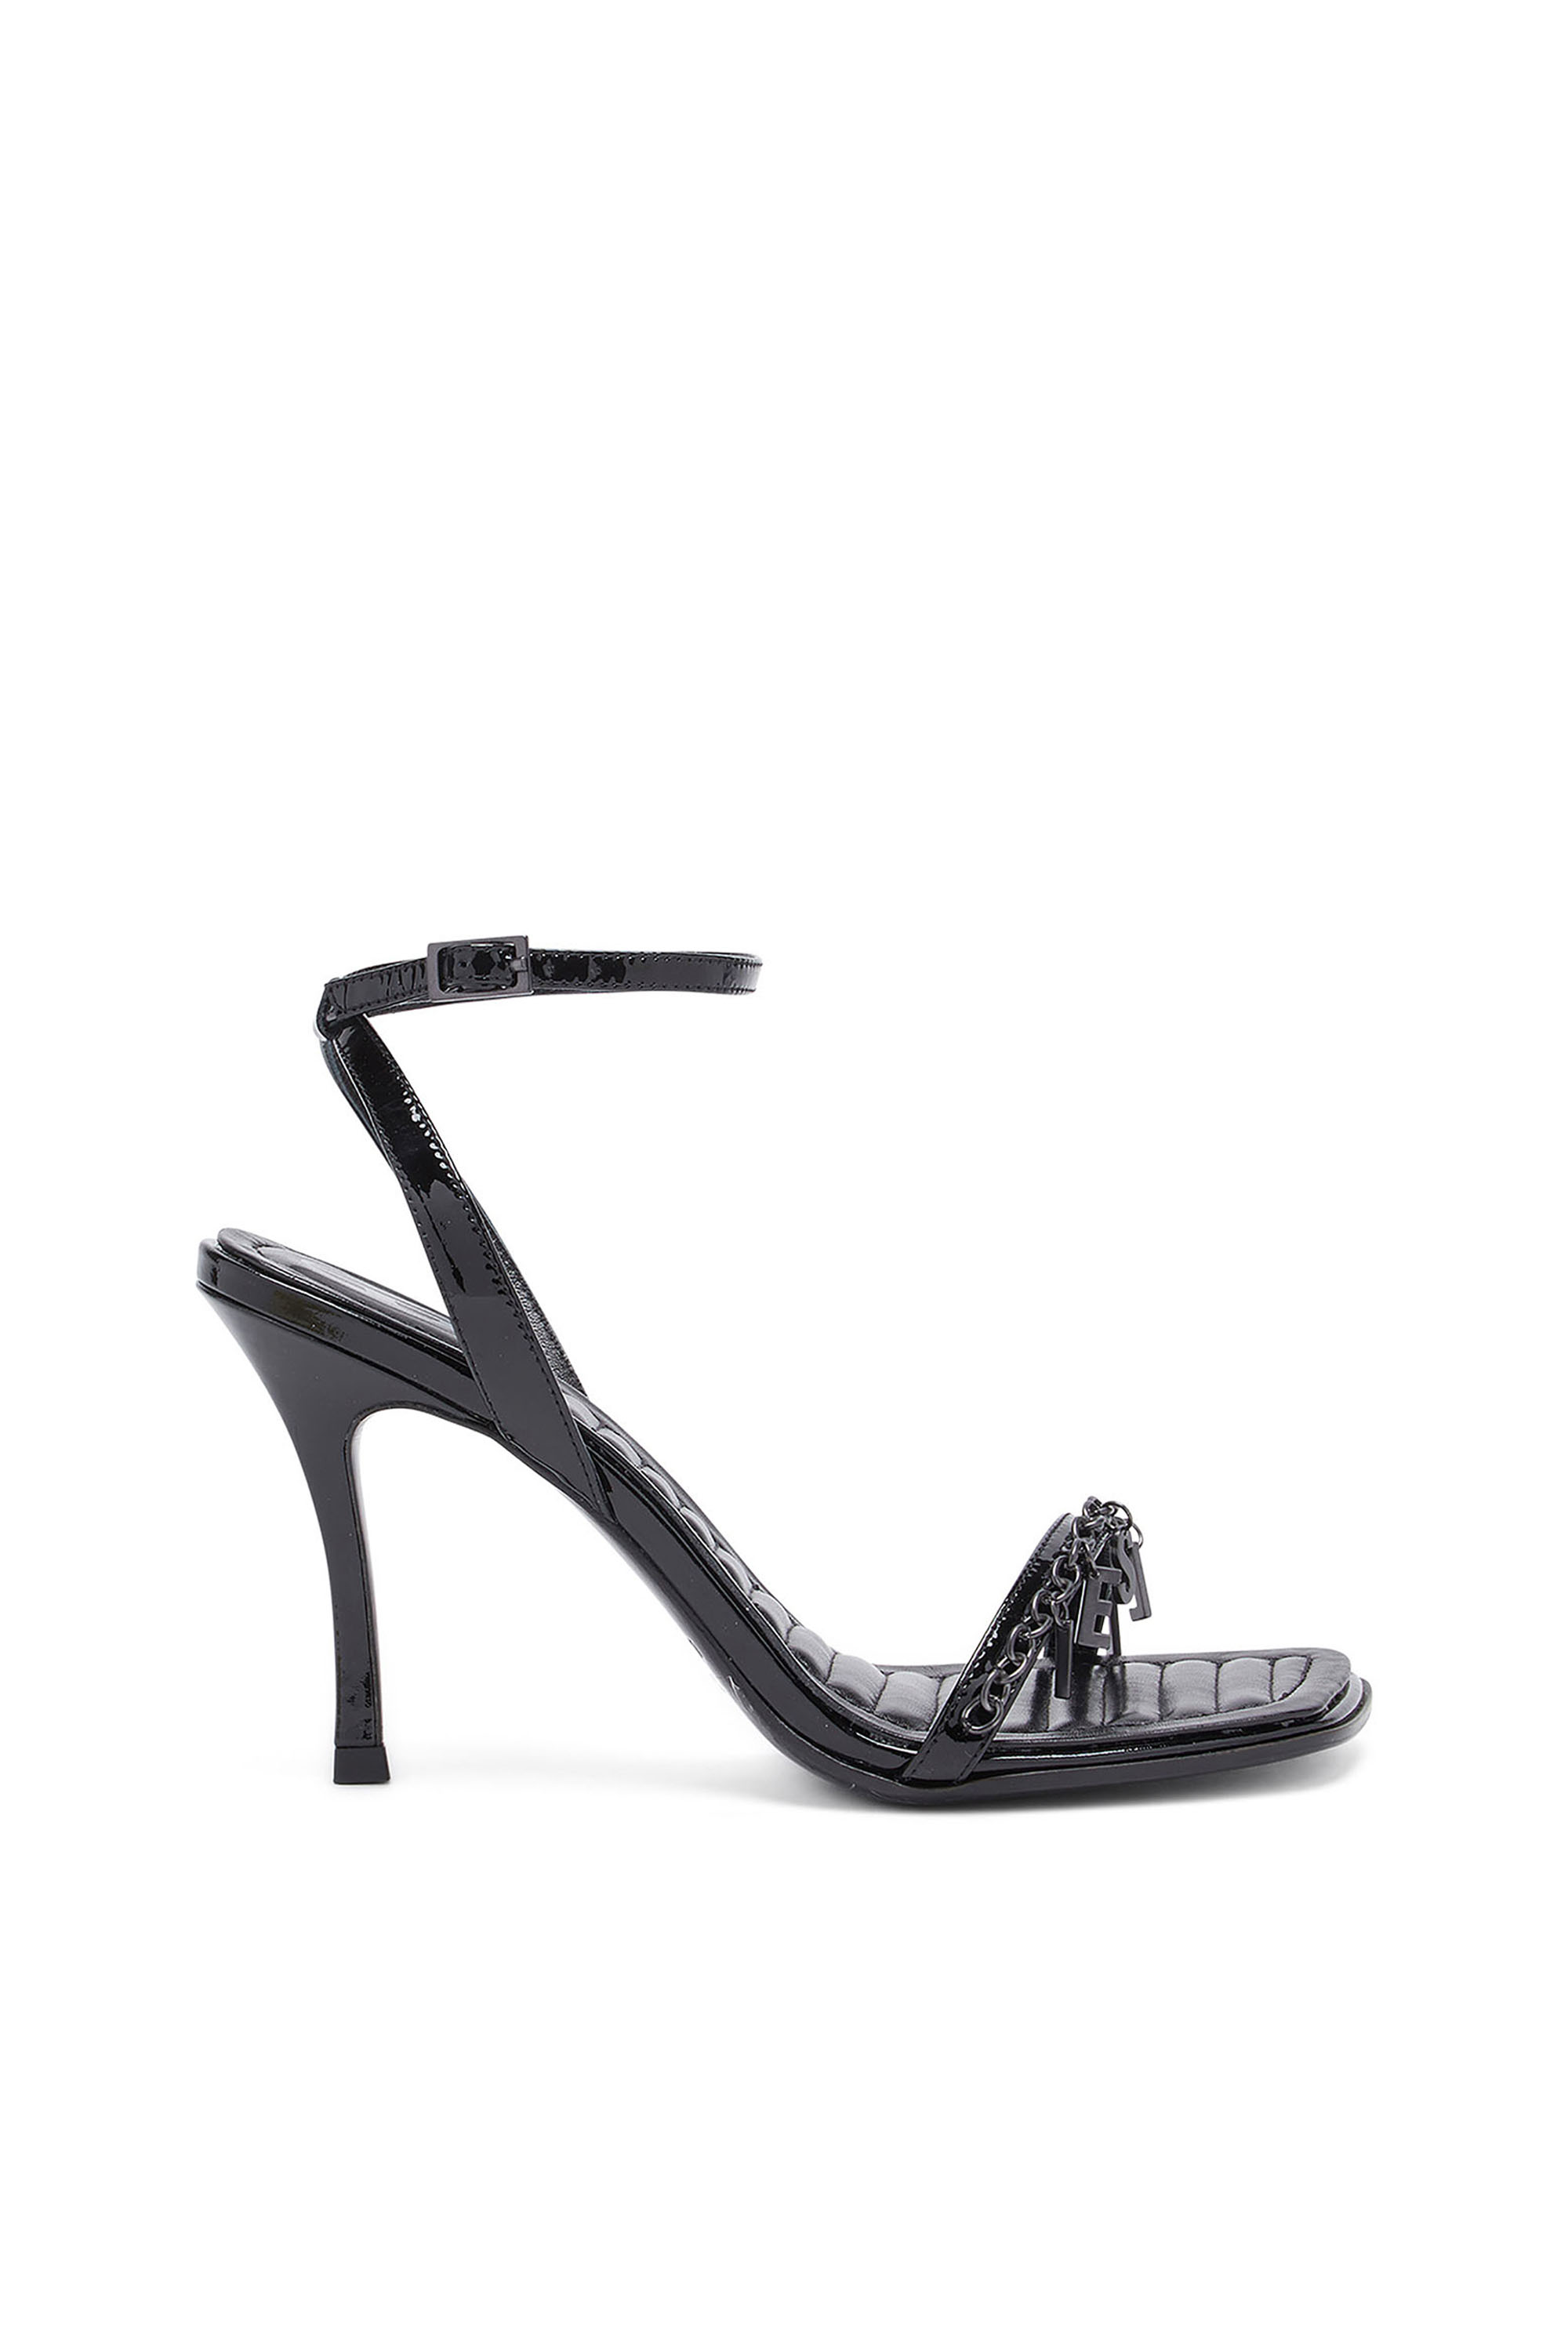 Diesel - D-Vina Sdl - Strappy sandals in metallic leather - Sandals - Woman - Black